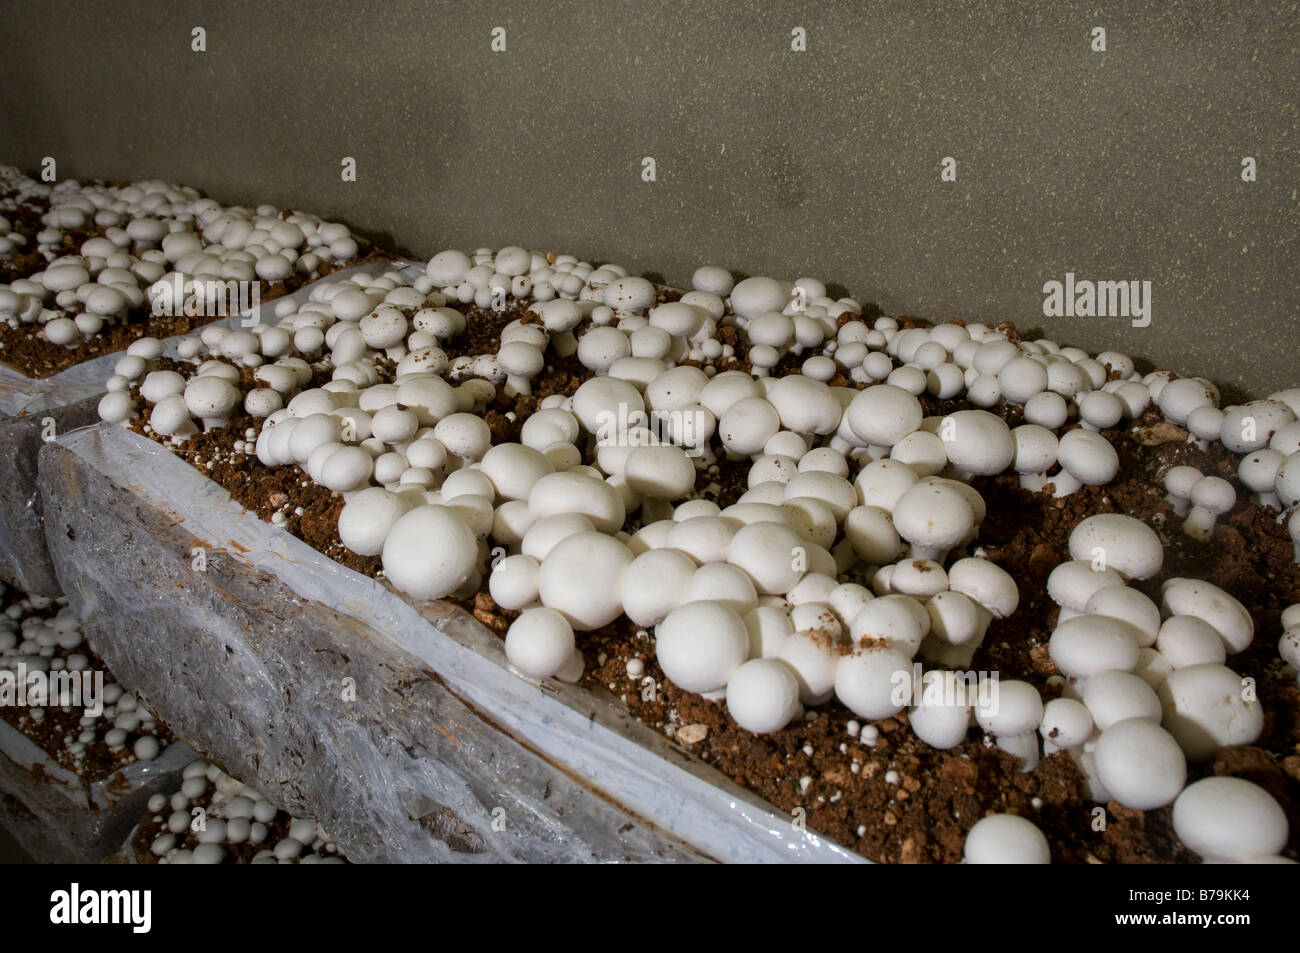 Agaricus bosporus (edible mushrooms) growing from organic compost in a plastic bag. Intensive farming plant. Stock Photo